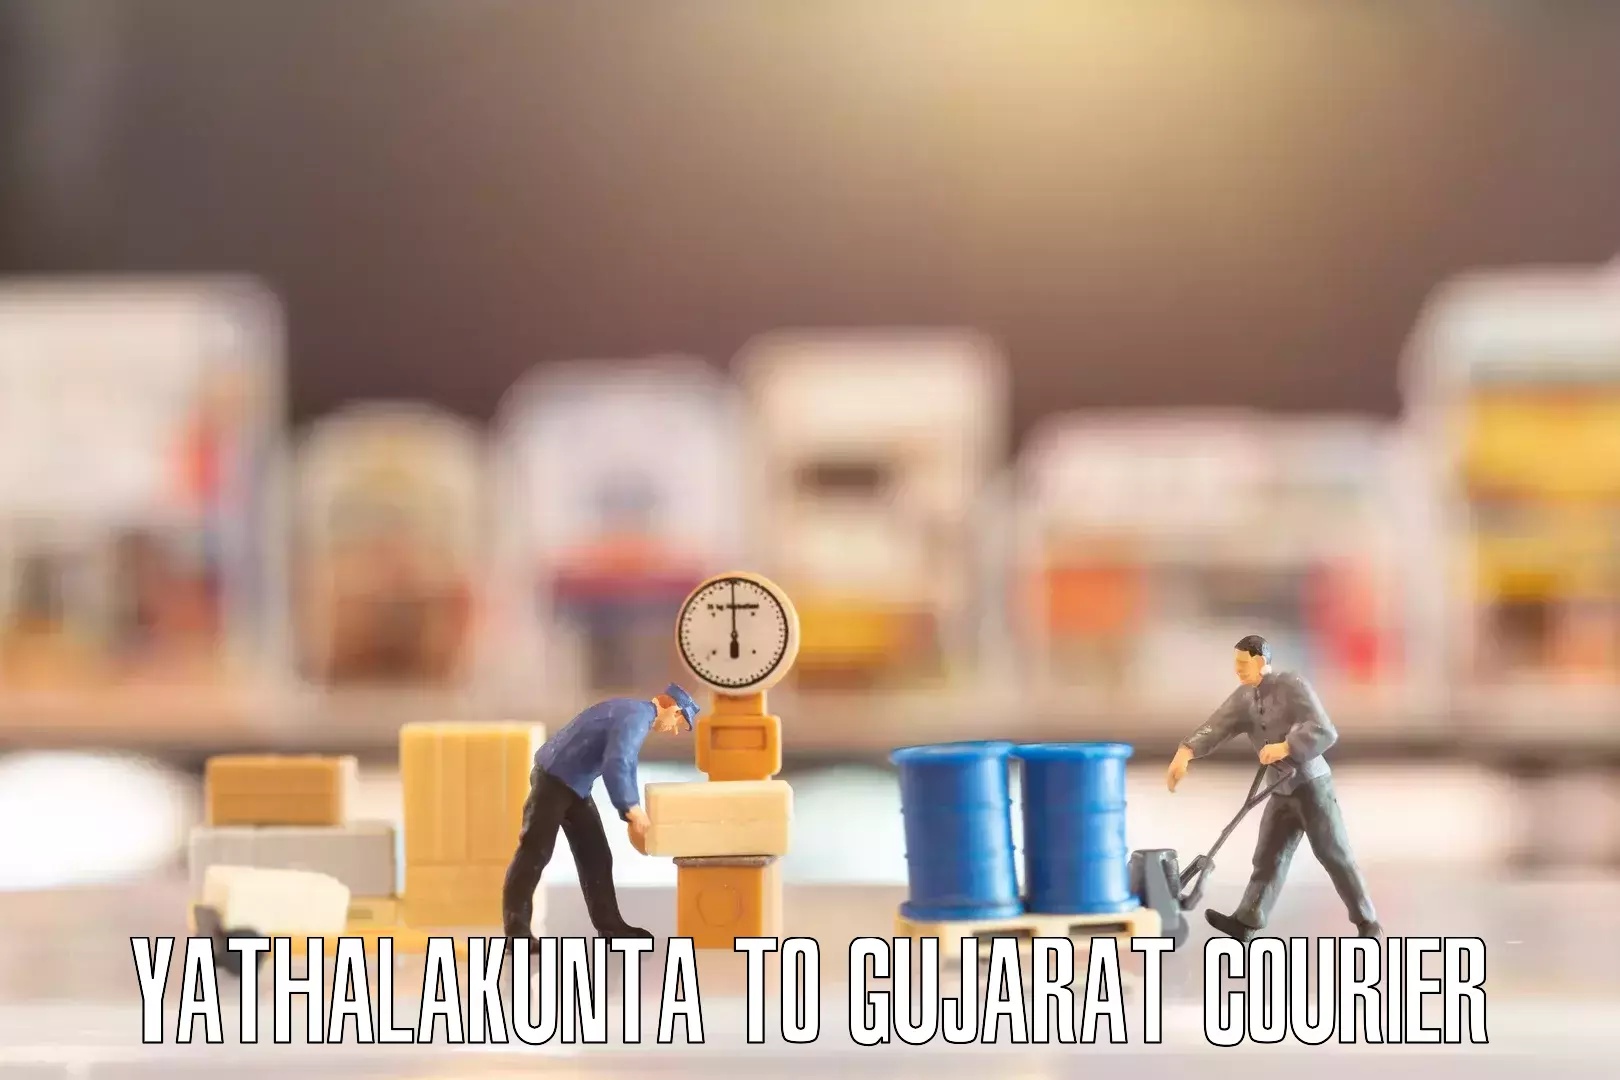 Trusted moving company Yathalakunta to Gujarat